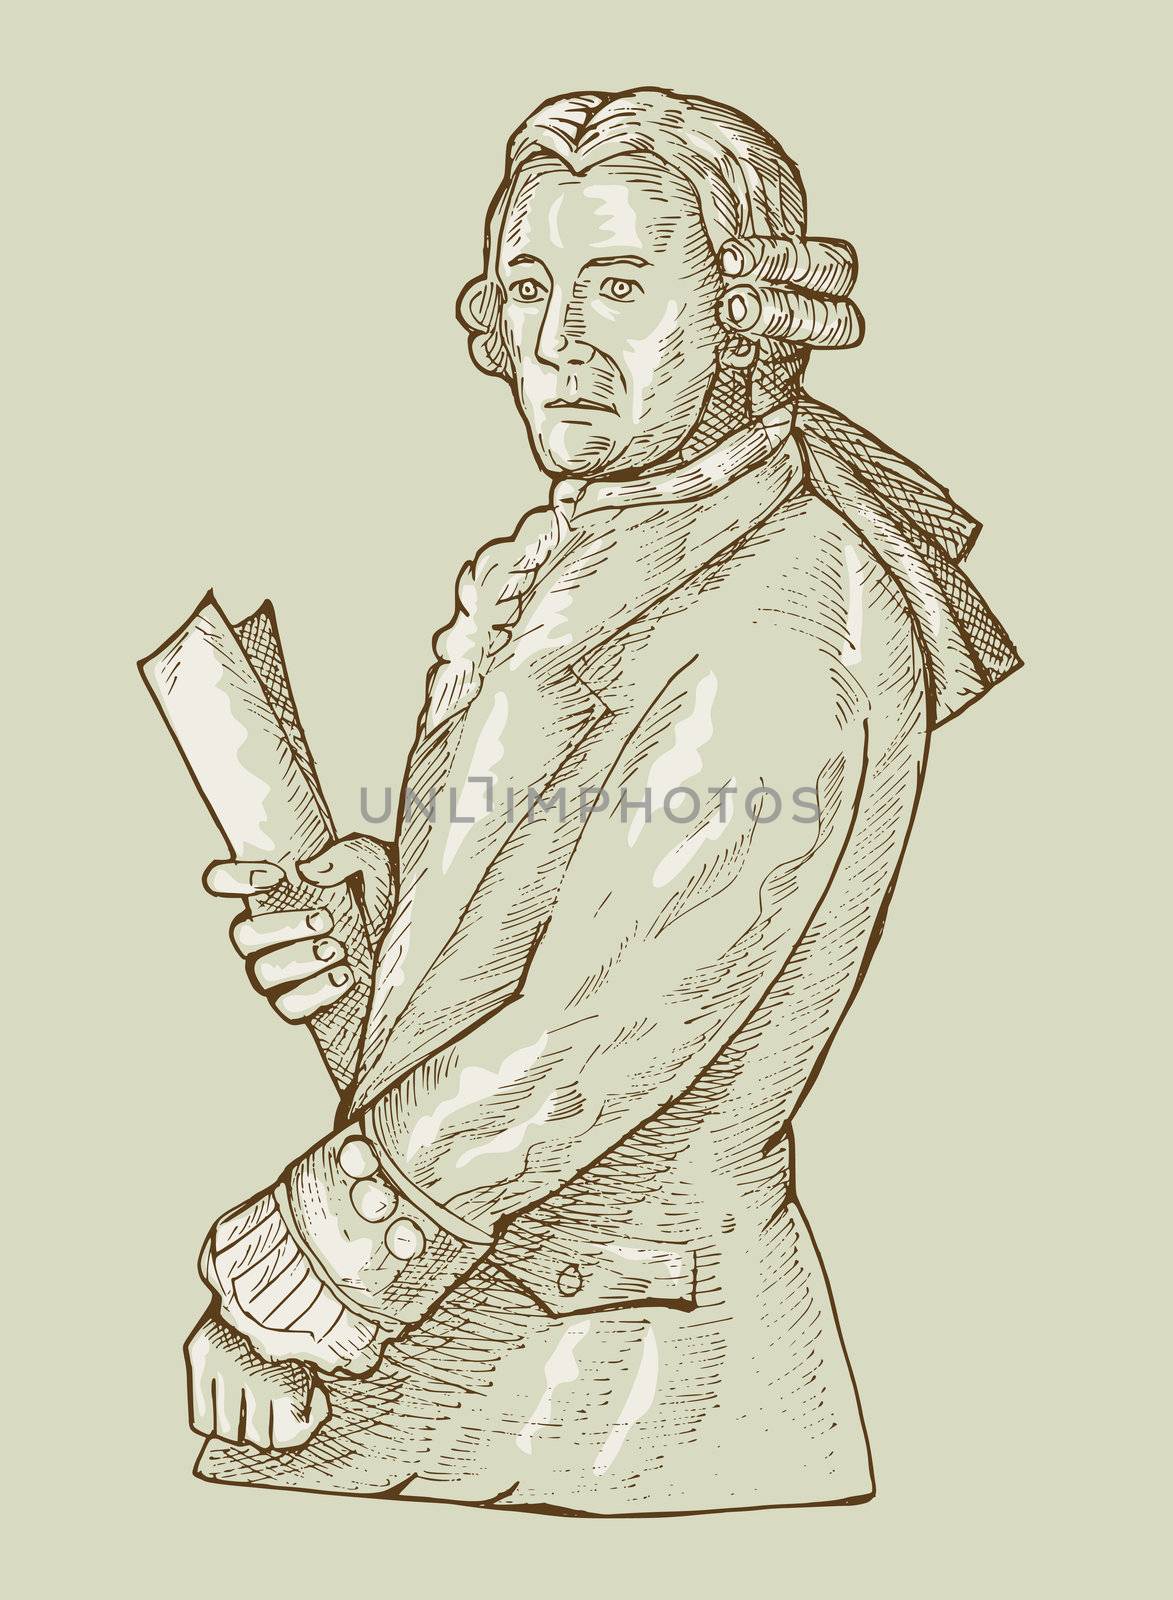 hand sketch illustration of a 17th century gentleman or aristocrat wearing wig.